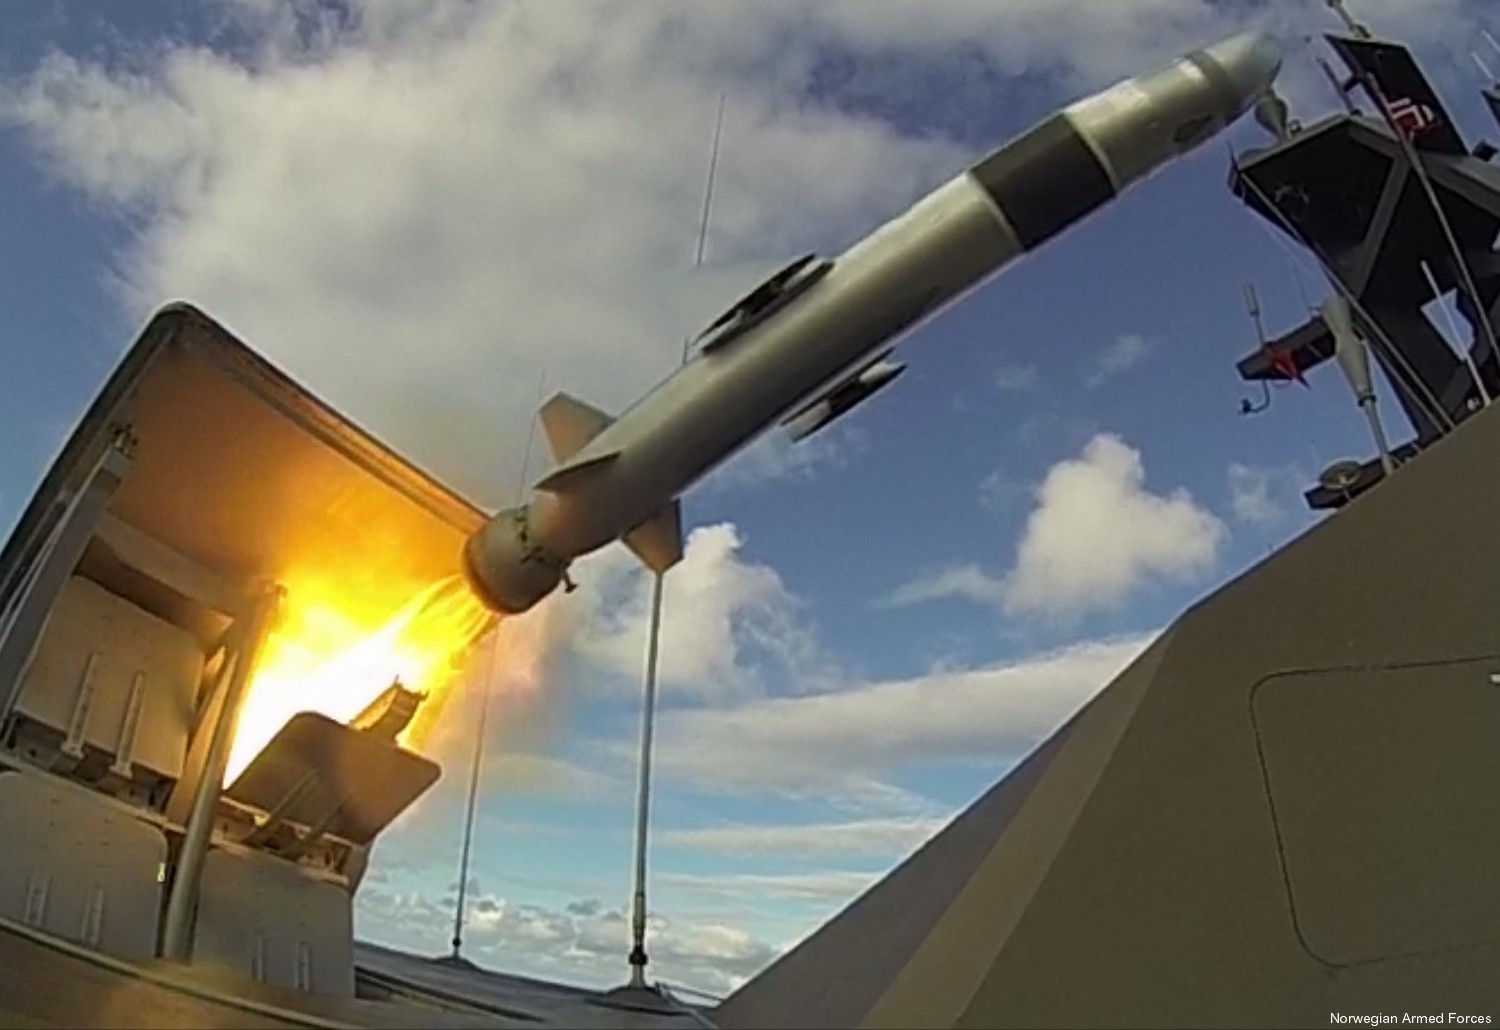 kds naval strike missile joint nsm kongsberg defence systems raytheon norway 04